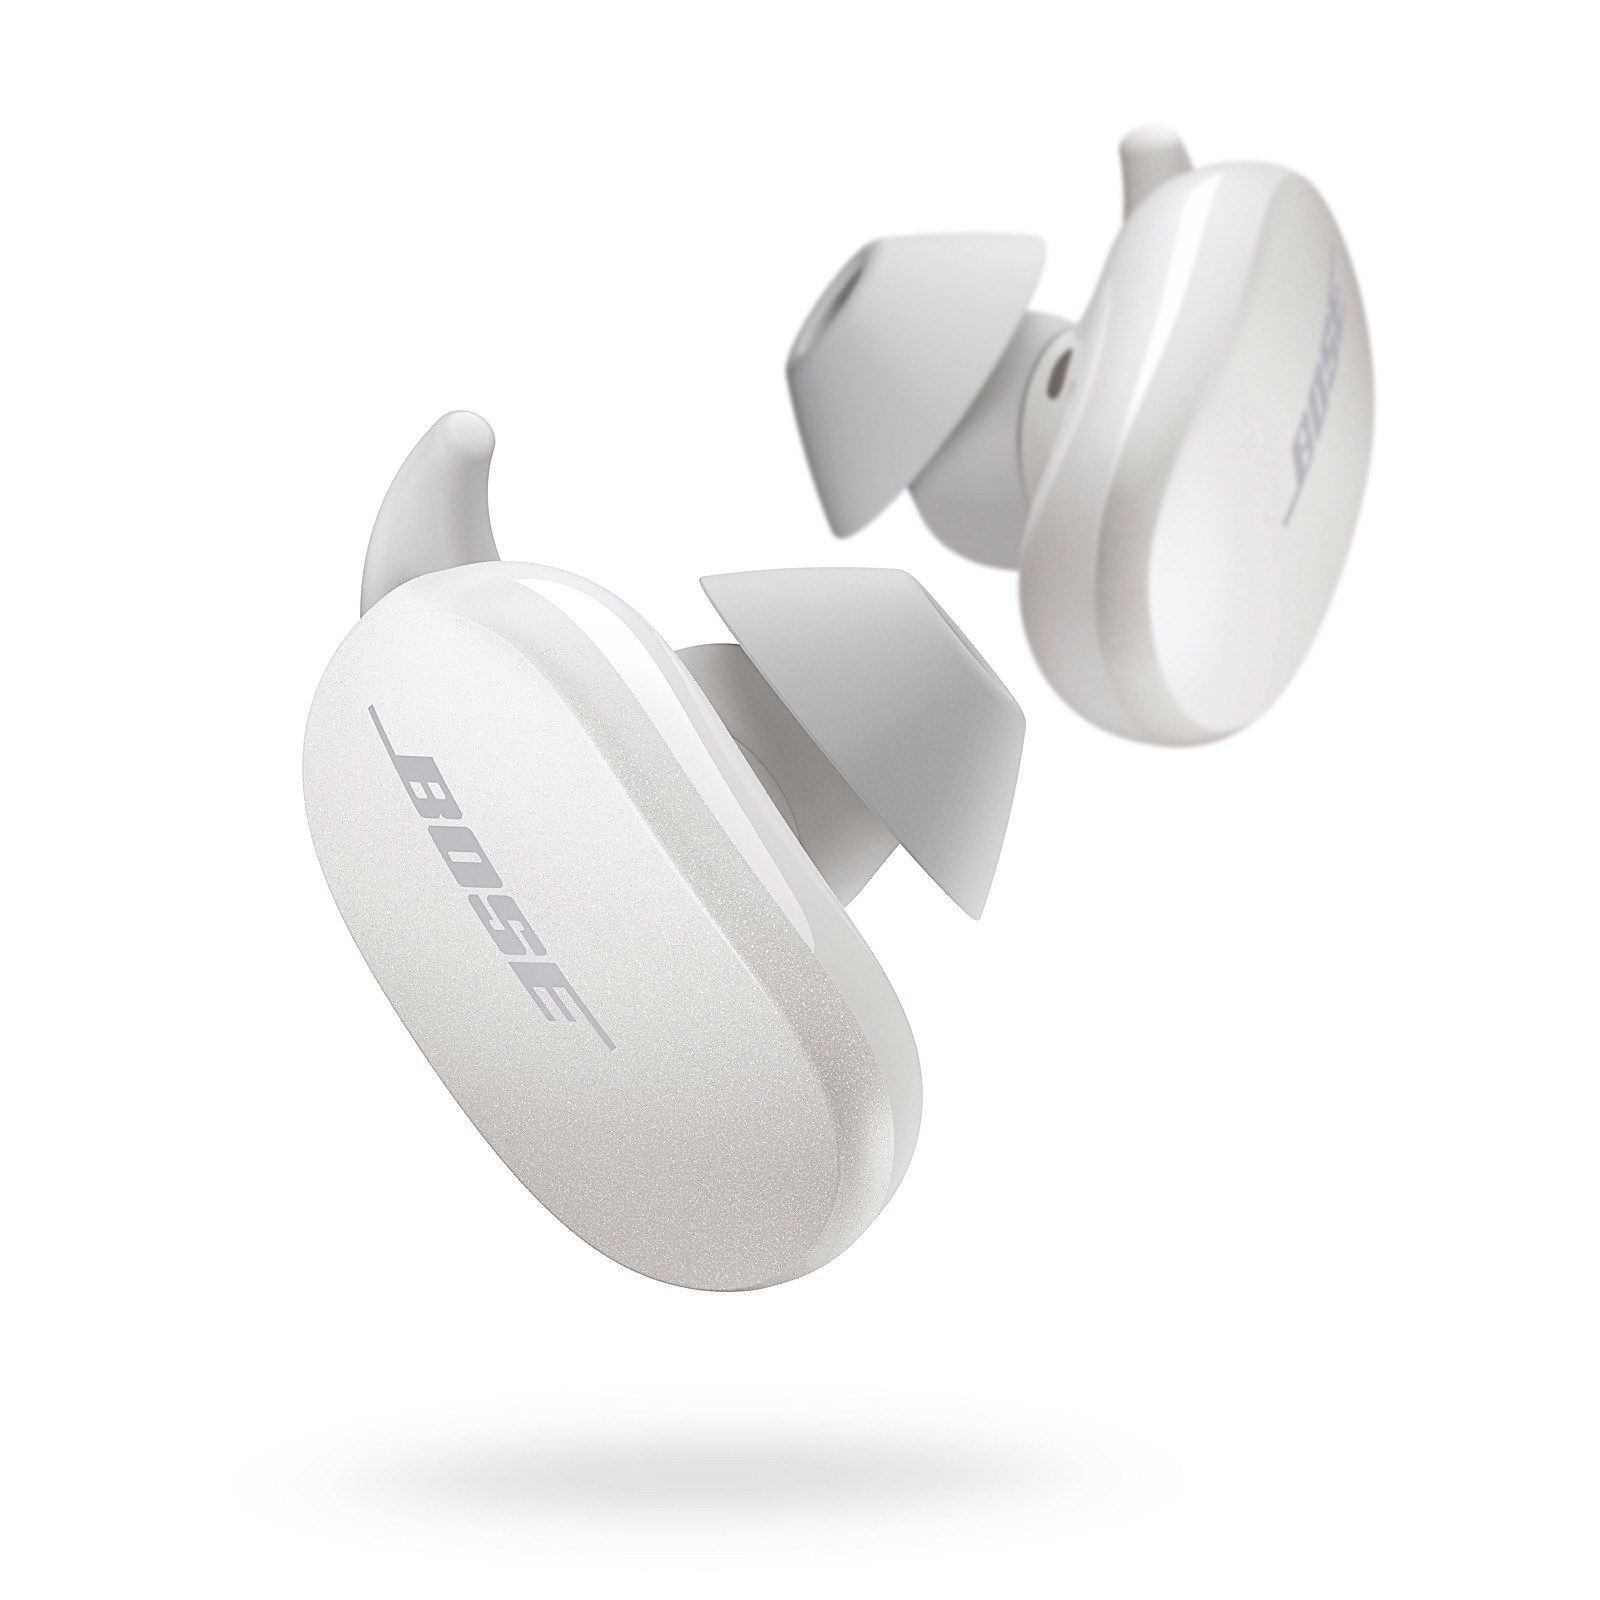 Bose QuietComfort Earbuds üst seviyede gürültü engelleme sunacak